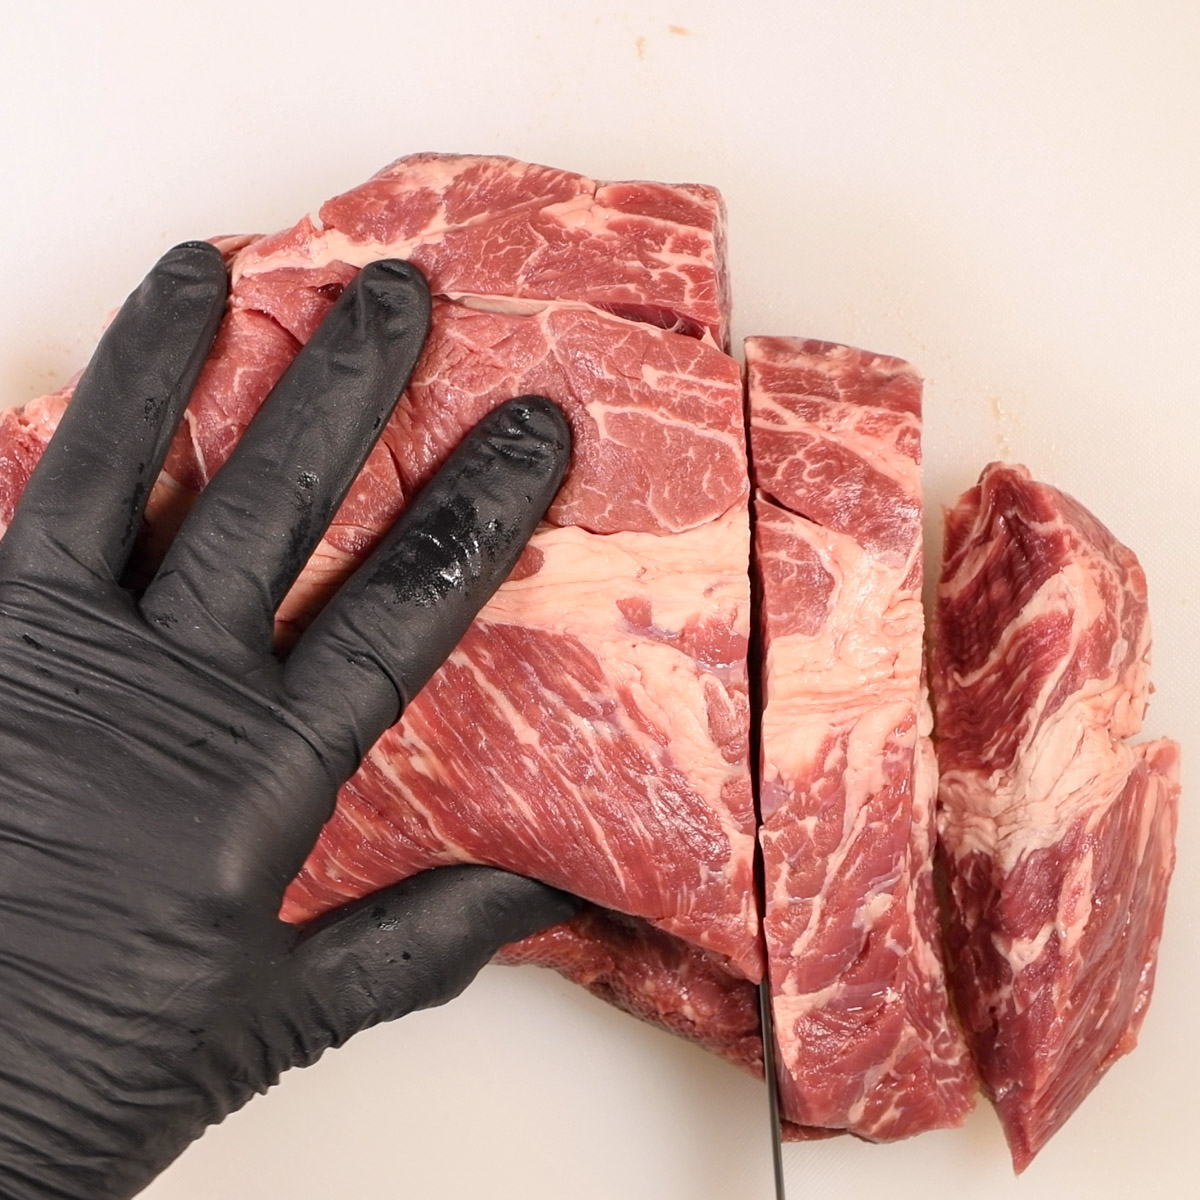 Cut the boneless pork shoulder into 1" pieces.